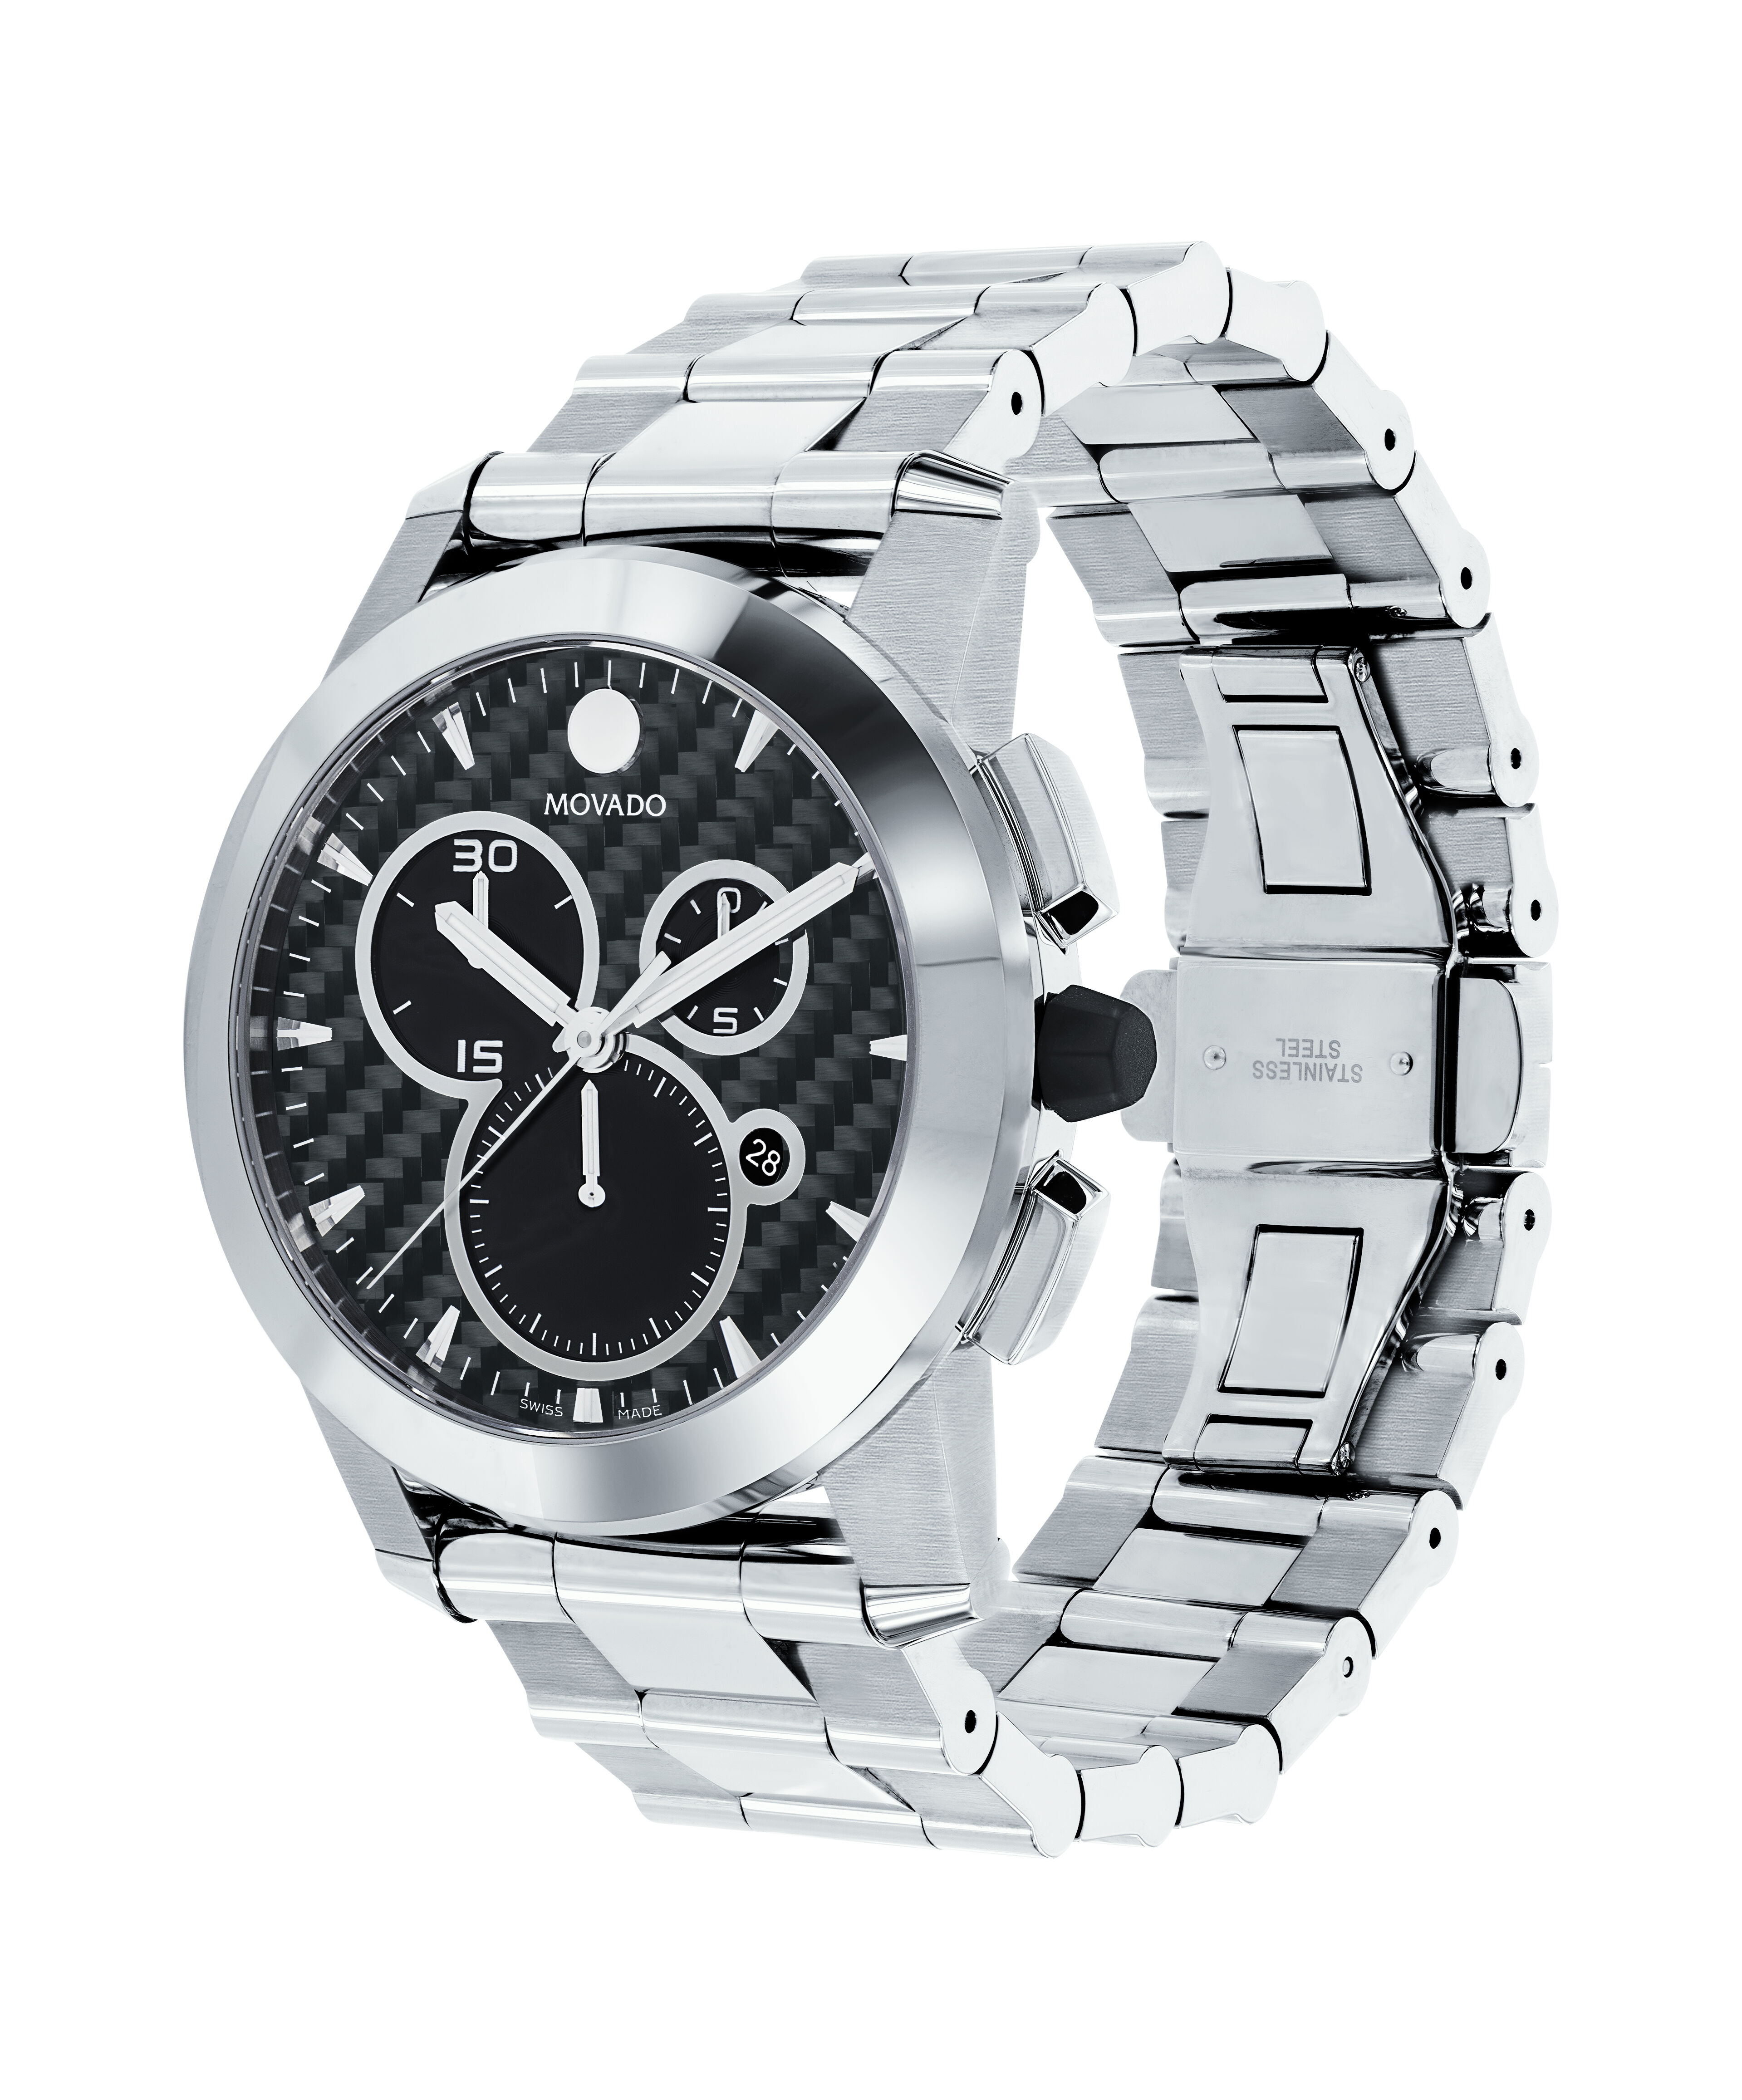 Replica Watch Sales Information